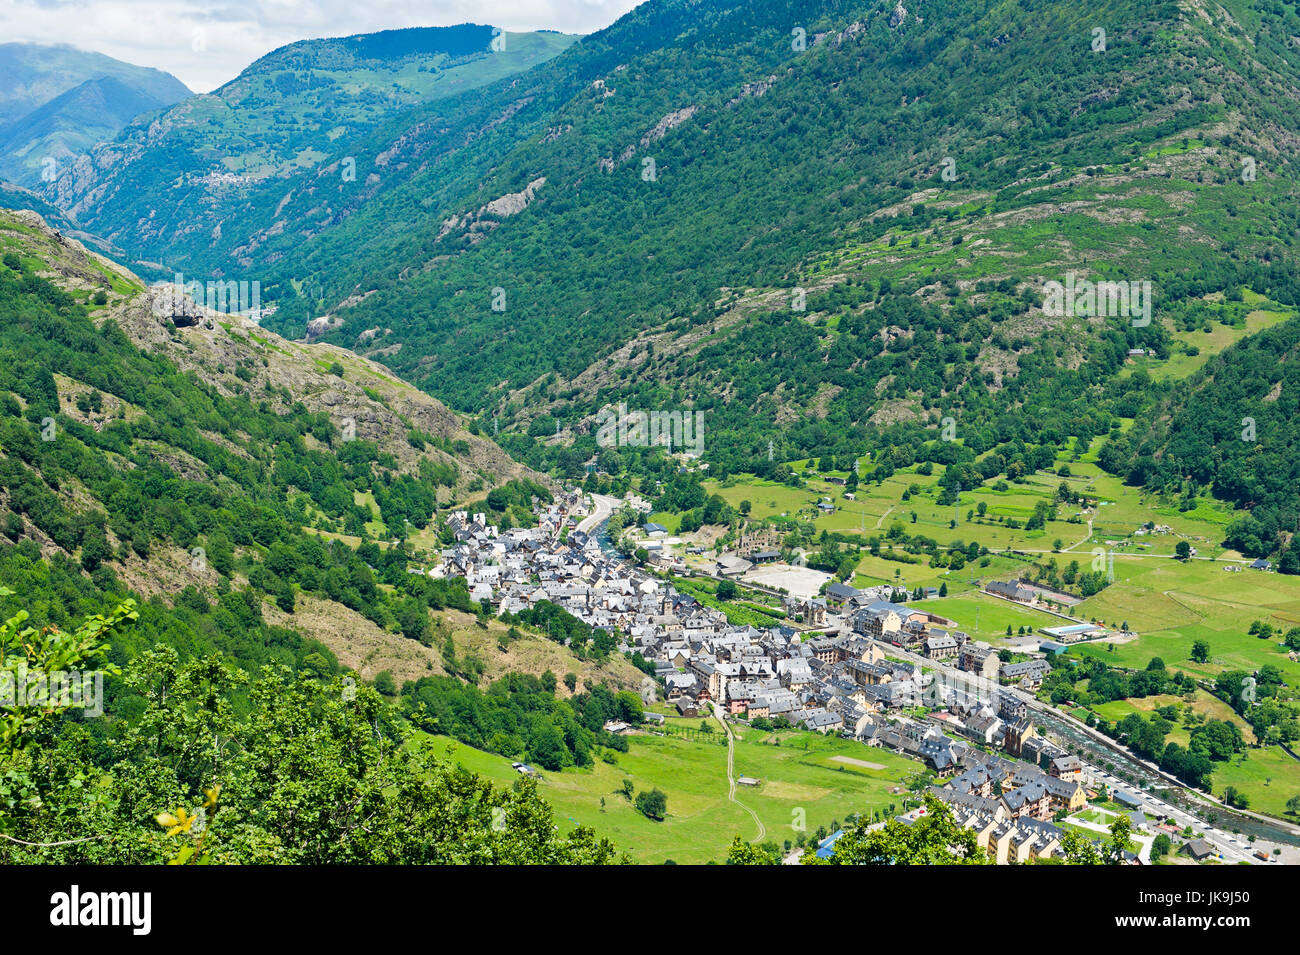 Bossòst, Pyrenean village, Aran Valley, province of Lleida, Catalonia, Northern Spain. Stock Photo